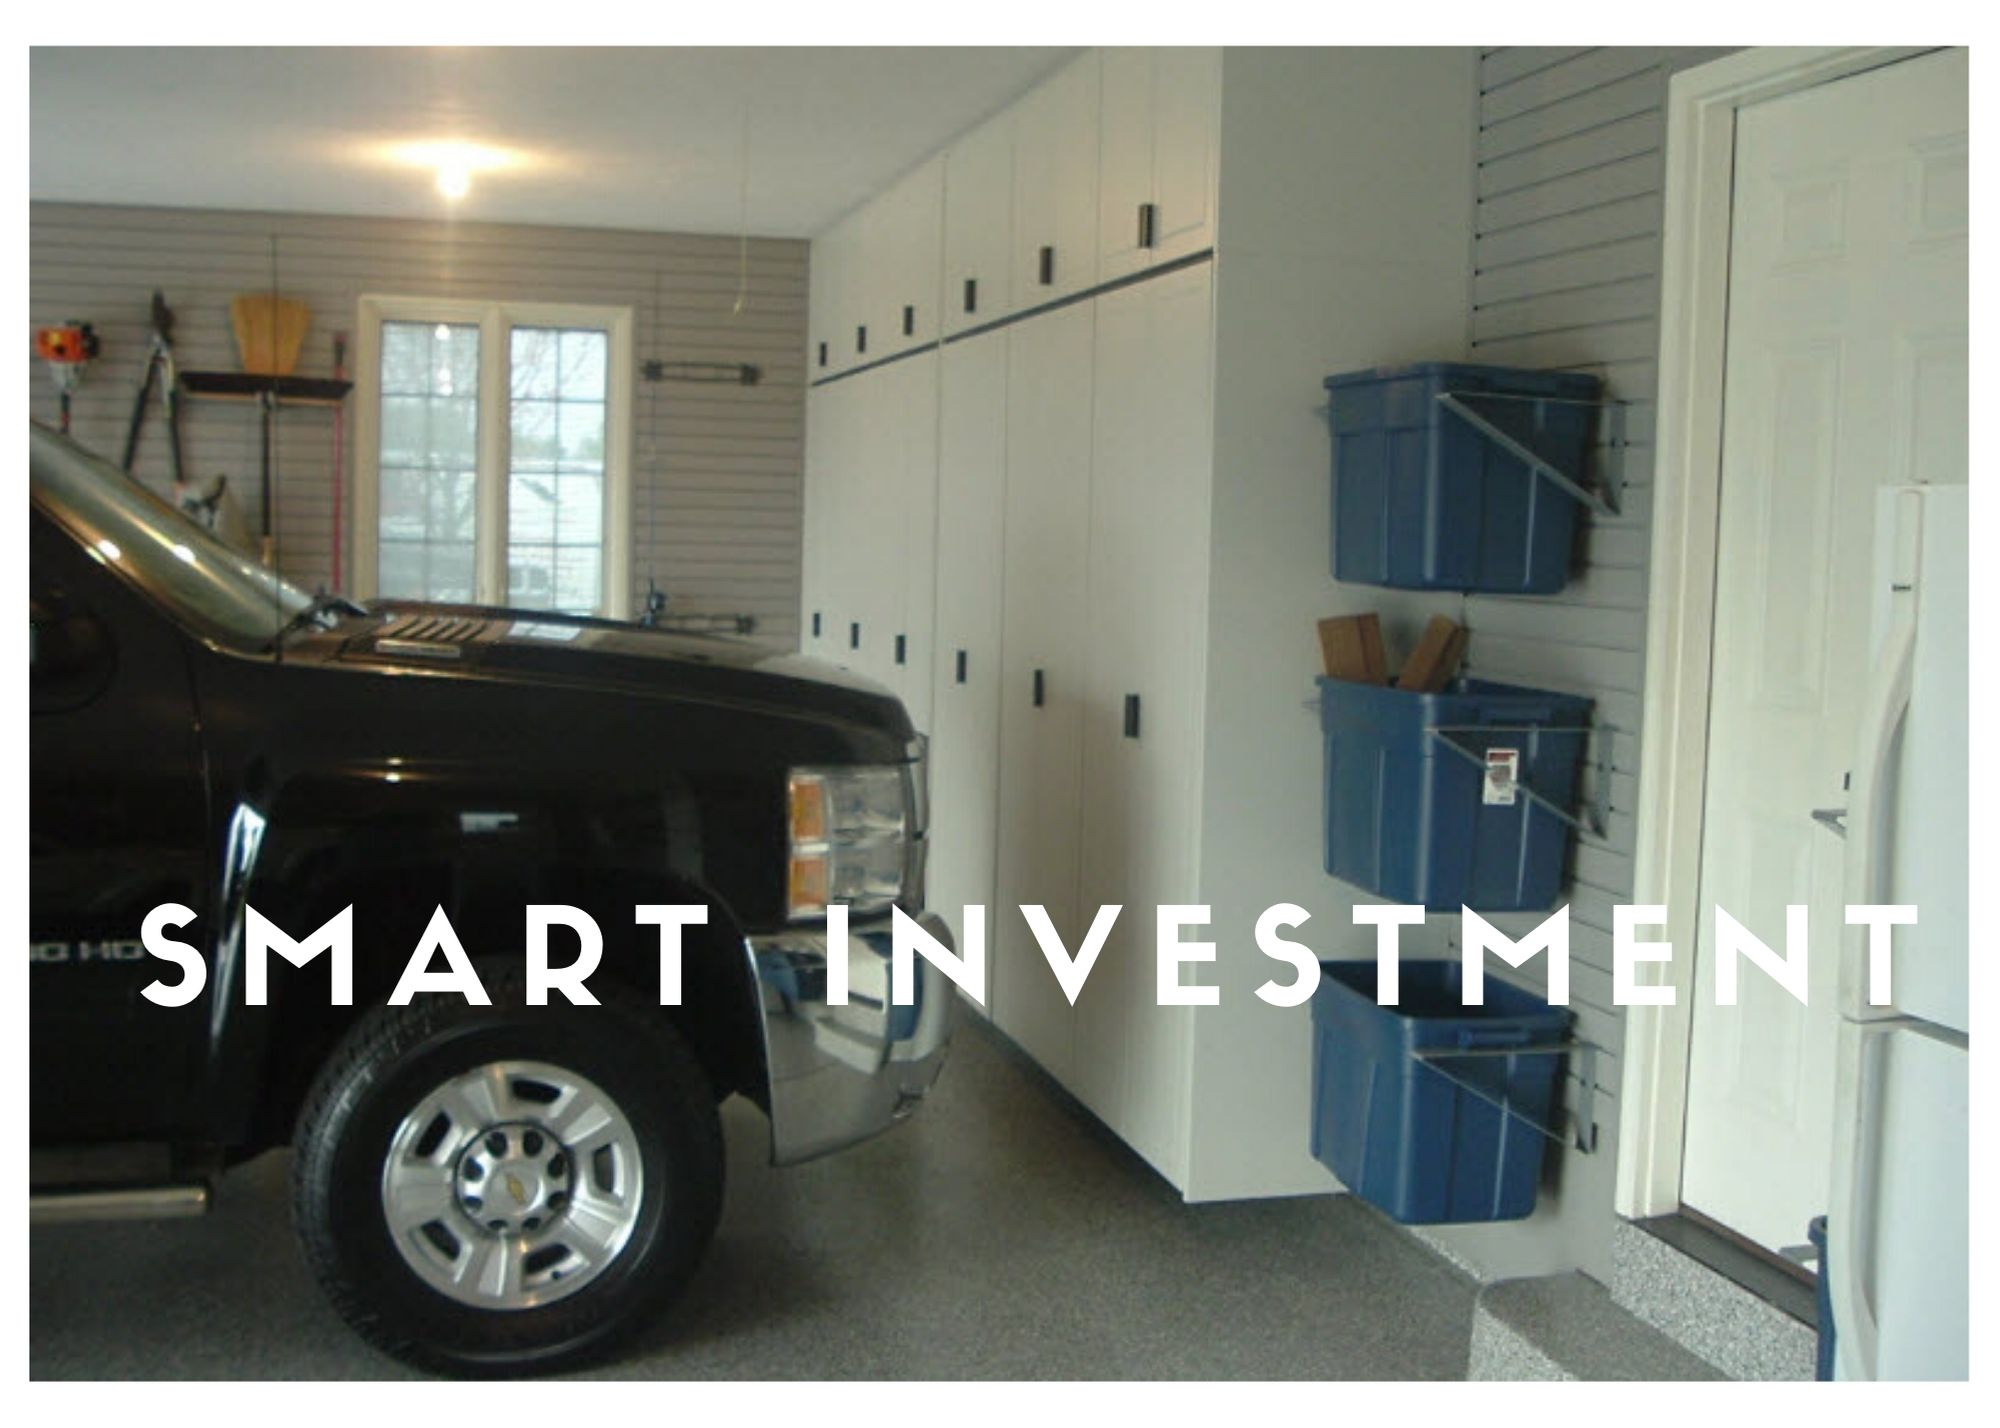 Smart Home Storage Investment